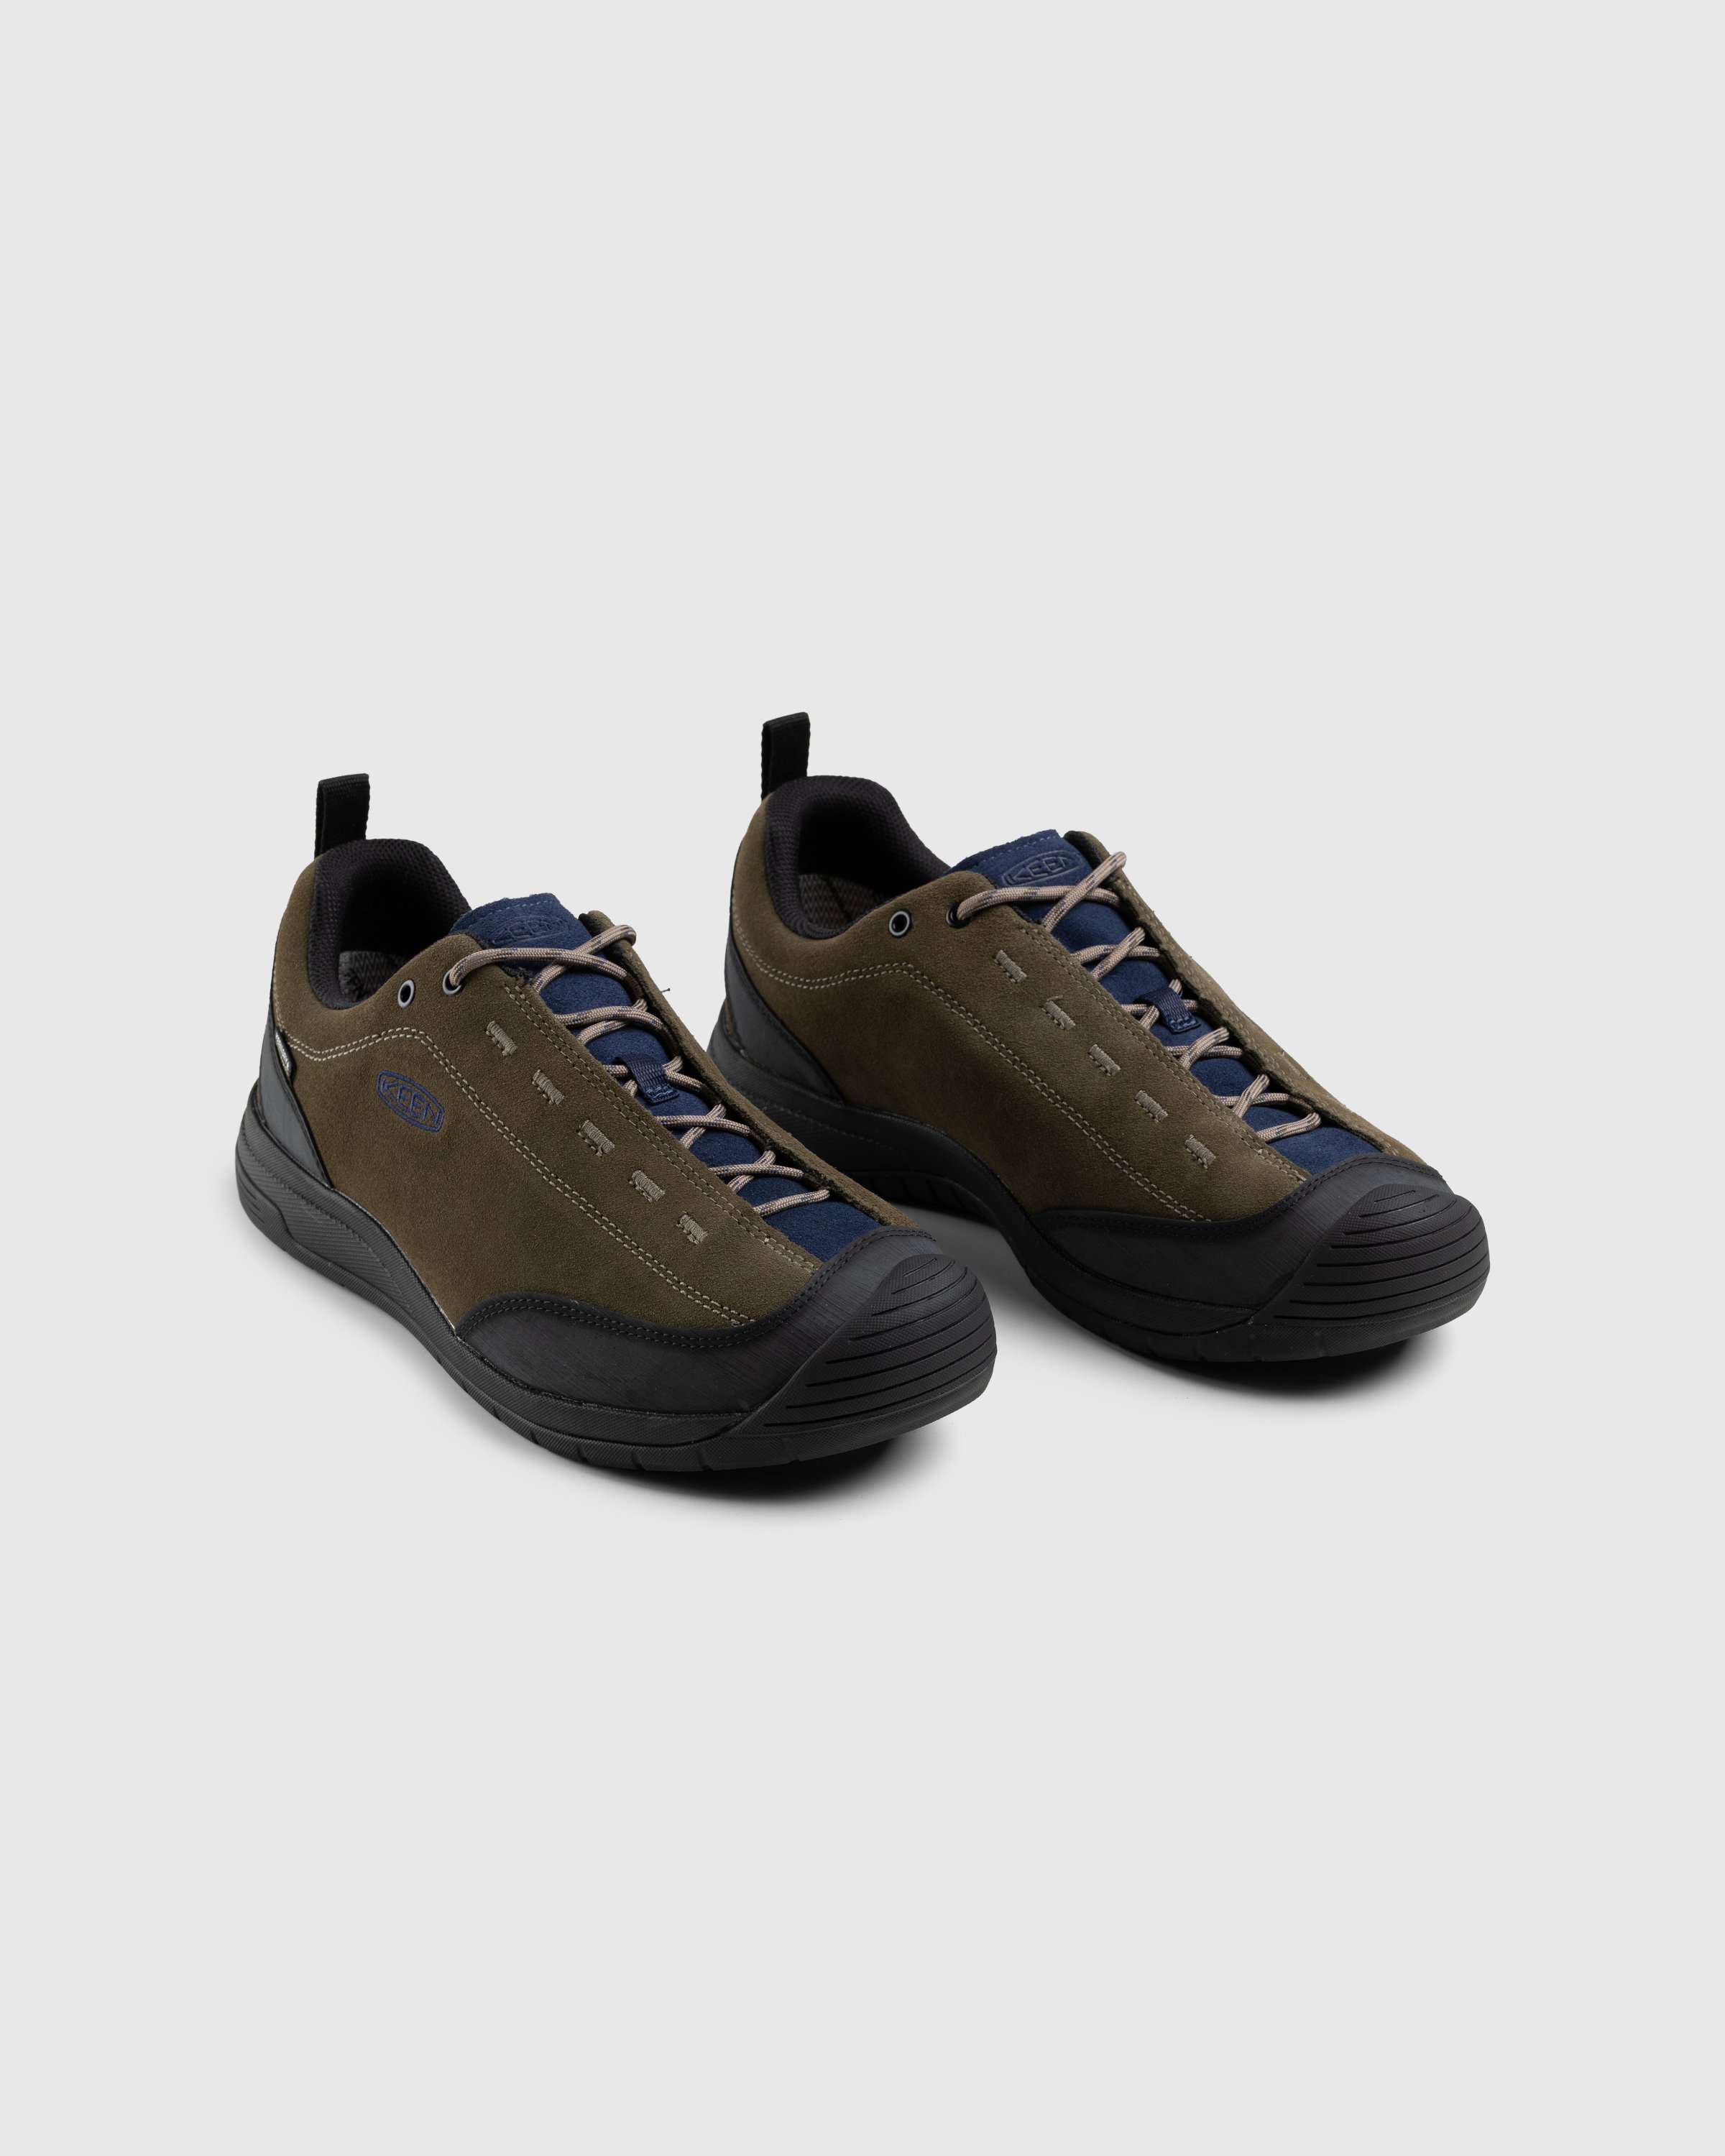 Keen - JASPER II WP CANTEEN/NAVAL ACADEMY - Footwear - Multi - Image 3